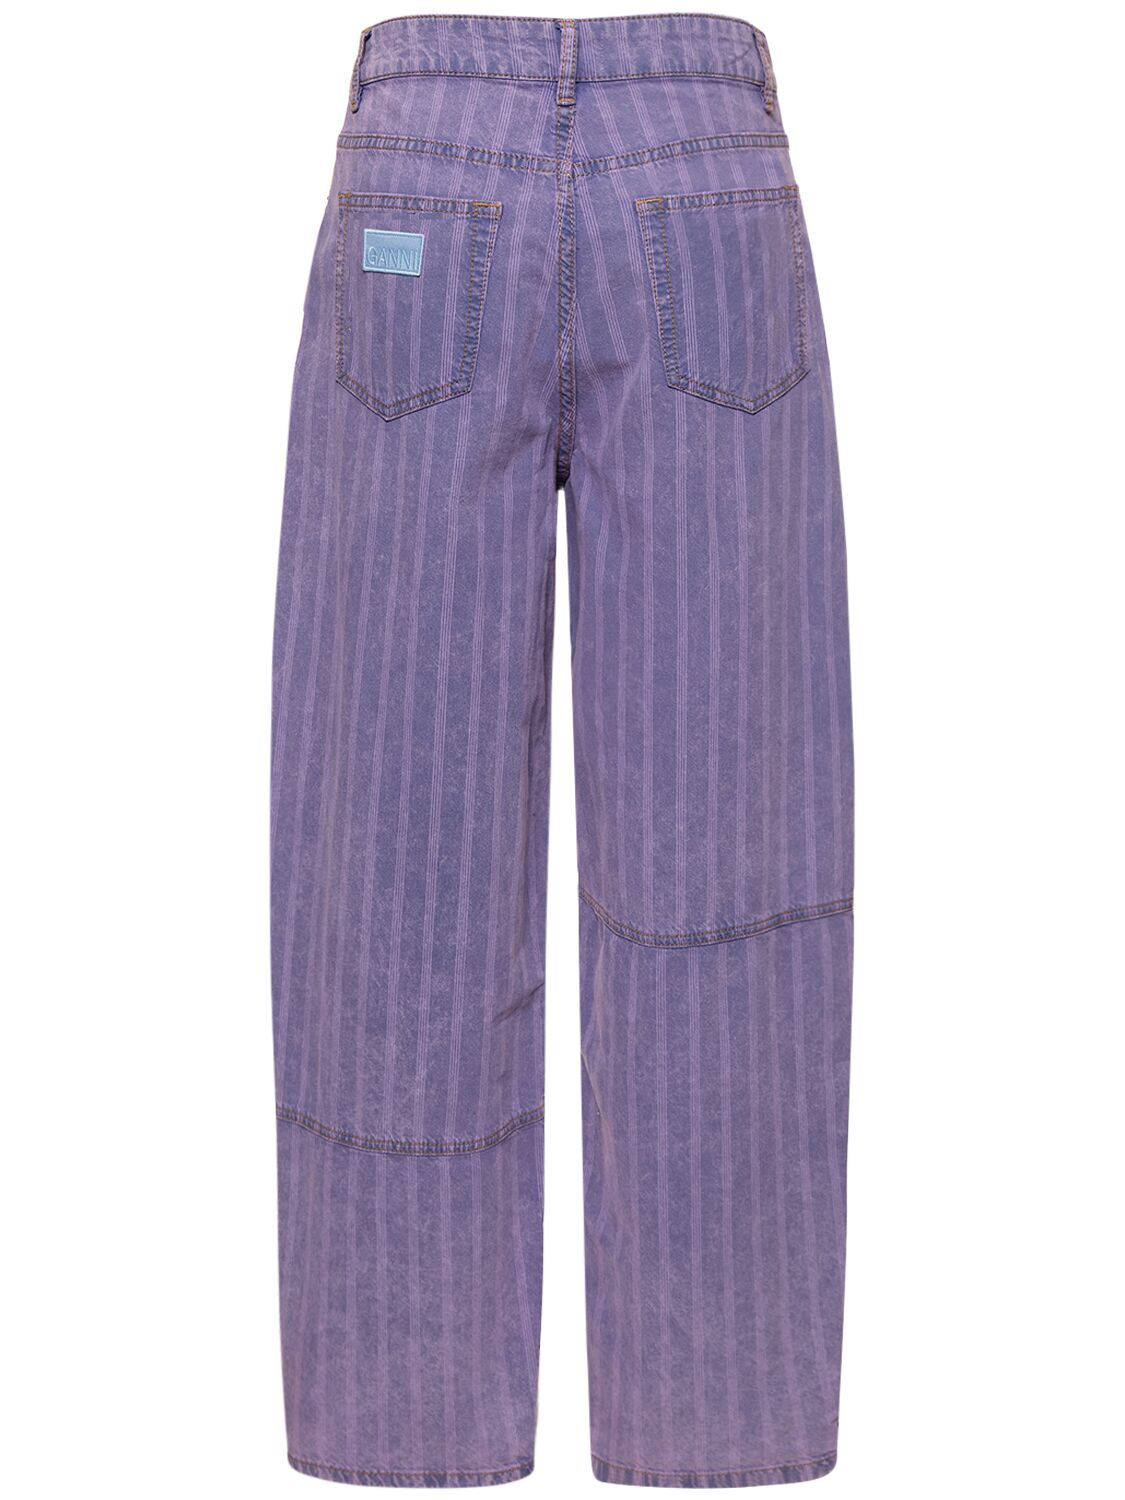 Shop Ganni Striped Light Cotton Denim Jeans In Mid Blue Stone